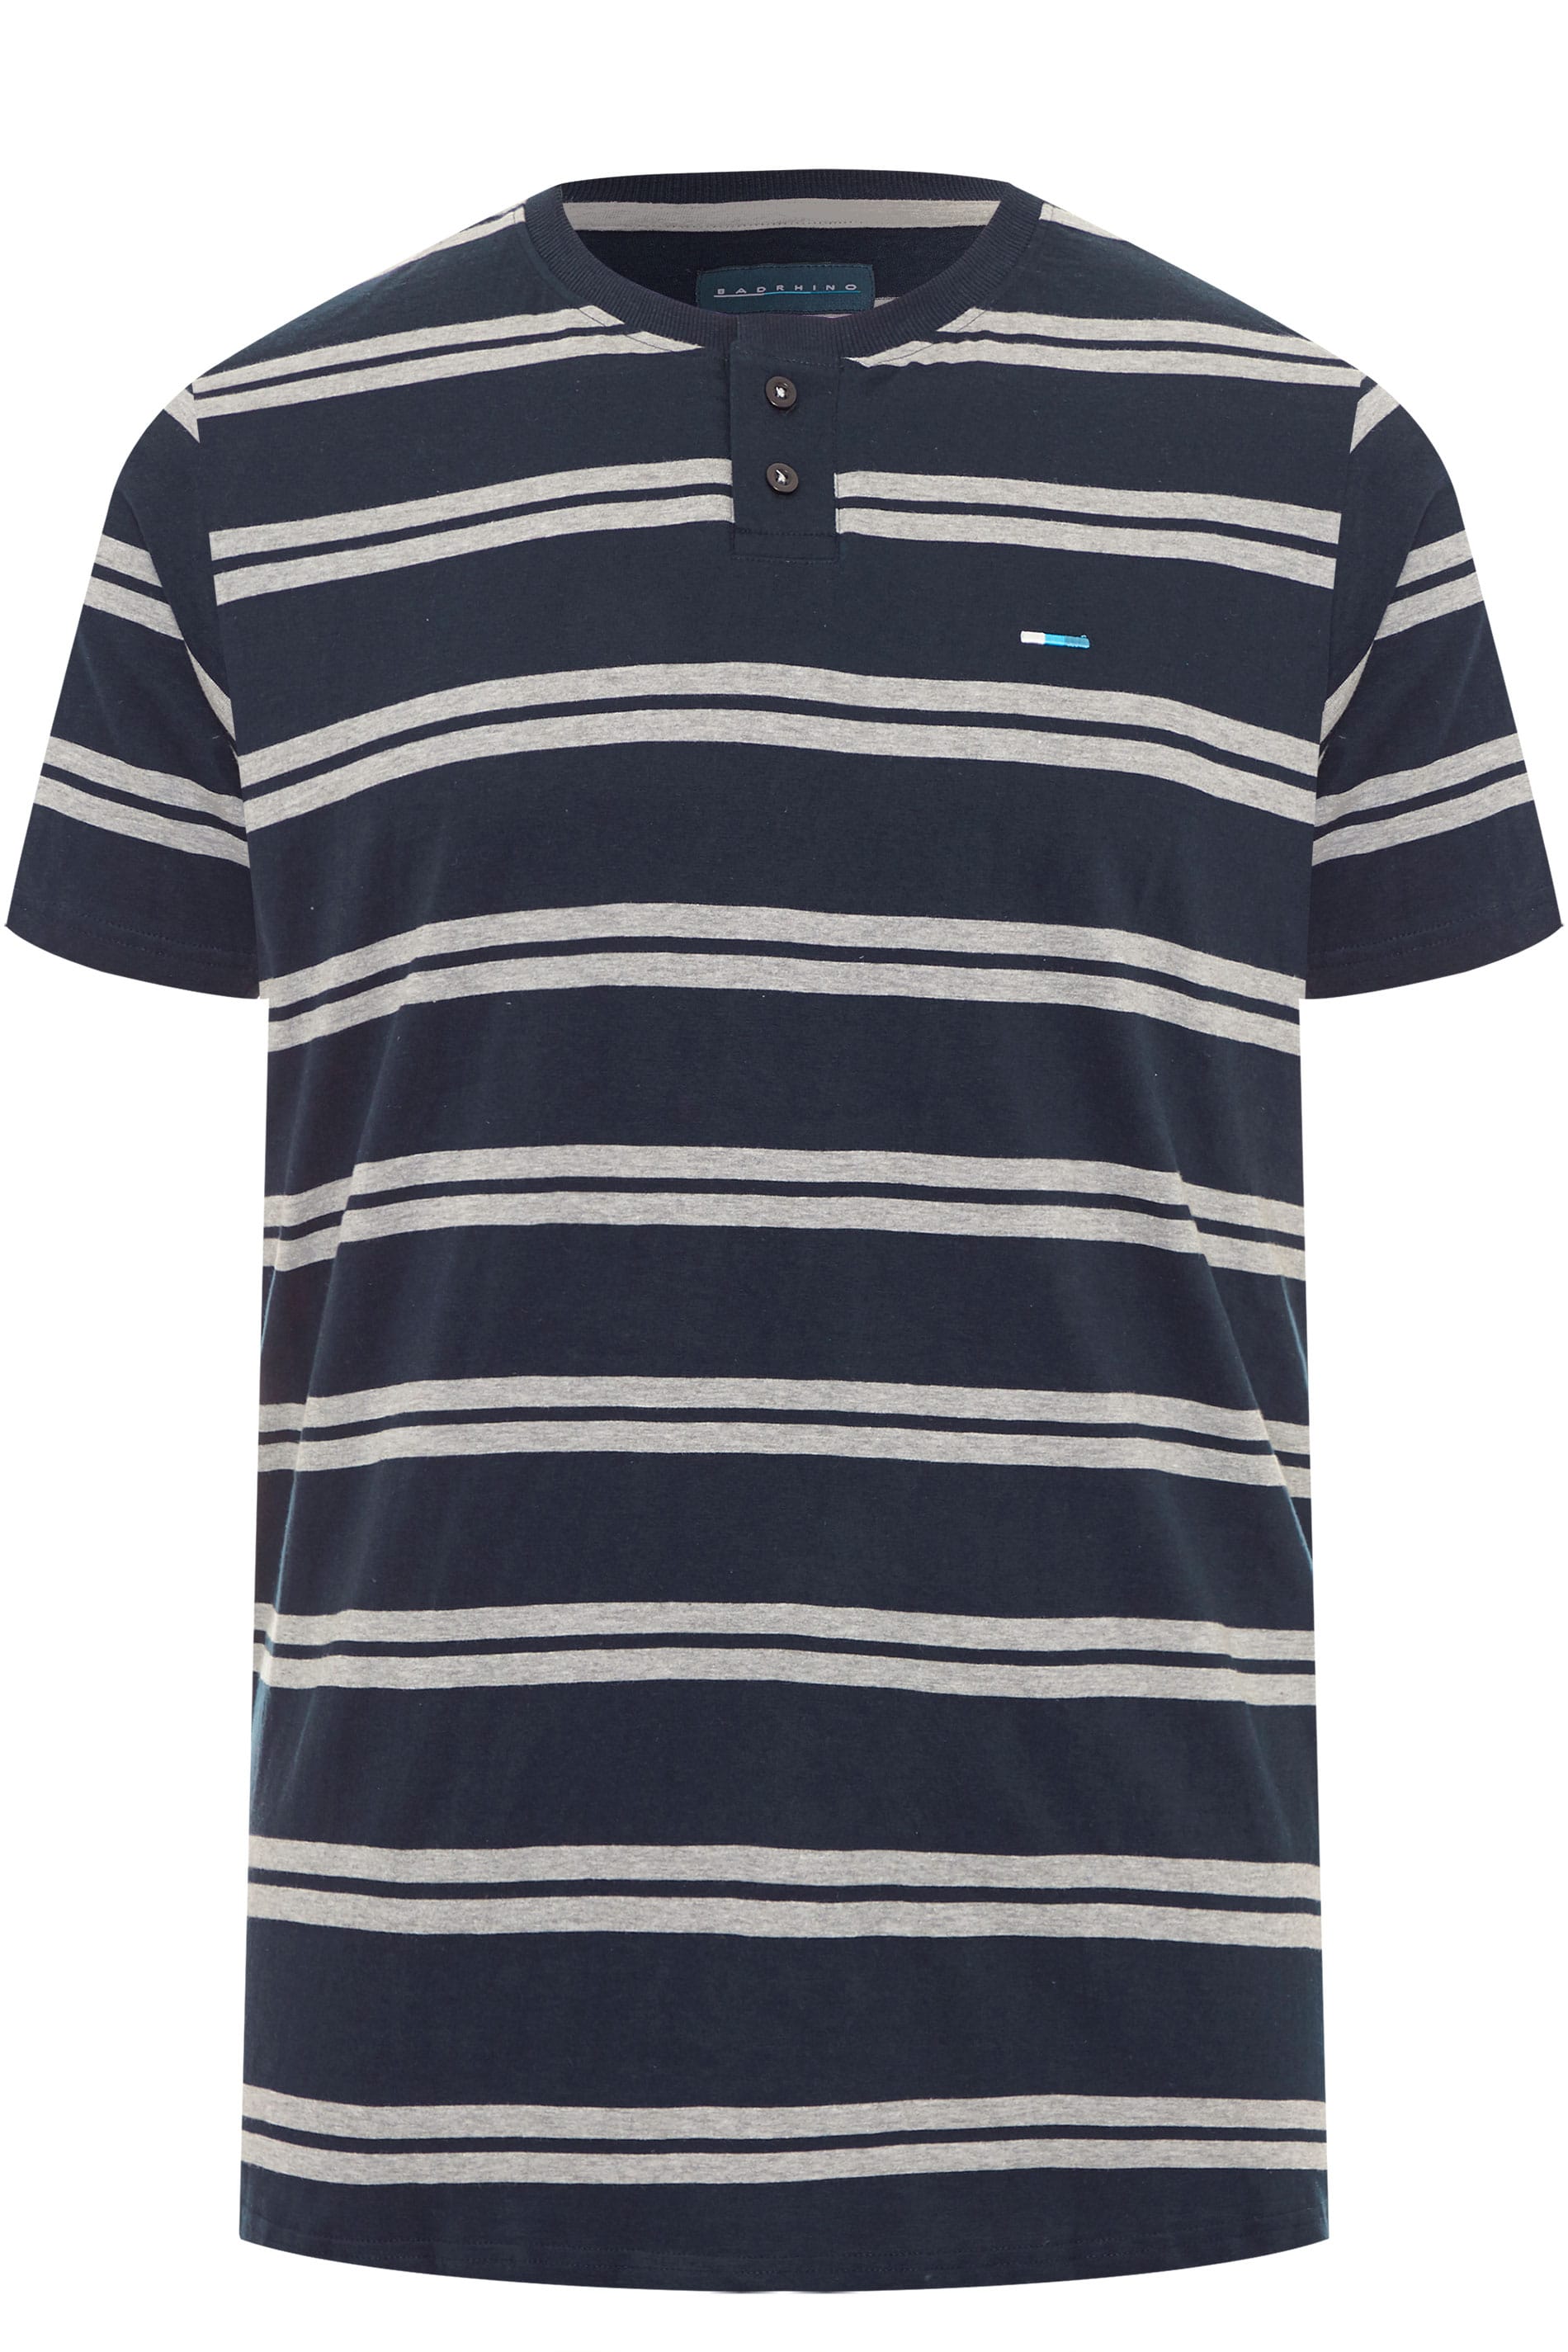 BadRhino Big & Tall Navy Blue & Grey Striped Grandad T-Shirt_9c95.jpg